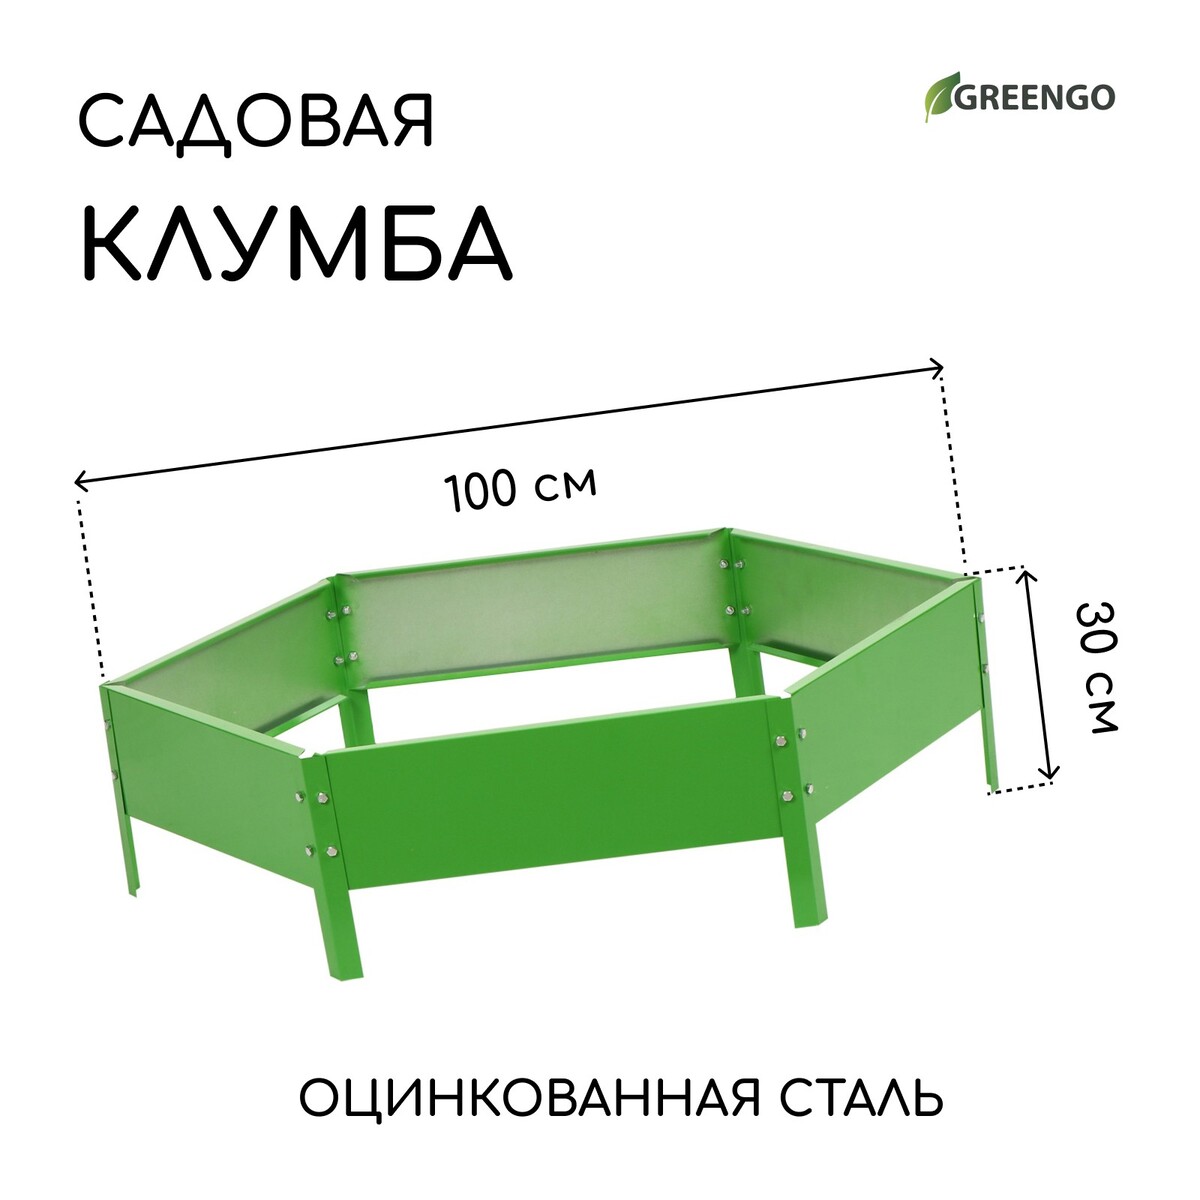 Клумба оцинкованная, d = 100 см, h = 15 см, ярко-зеленая, greengo